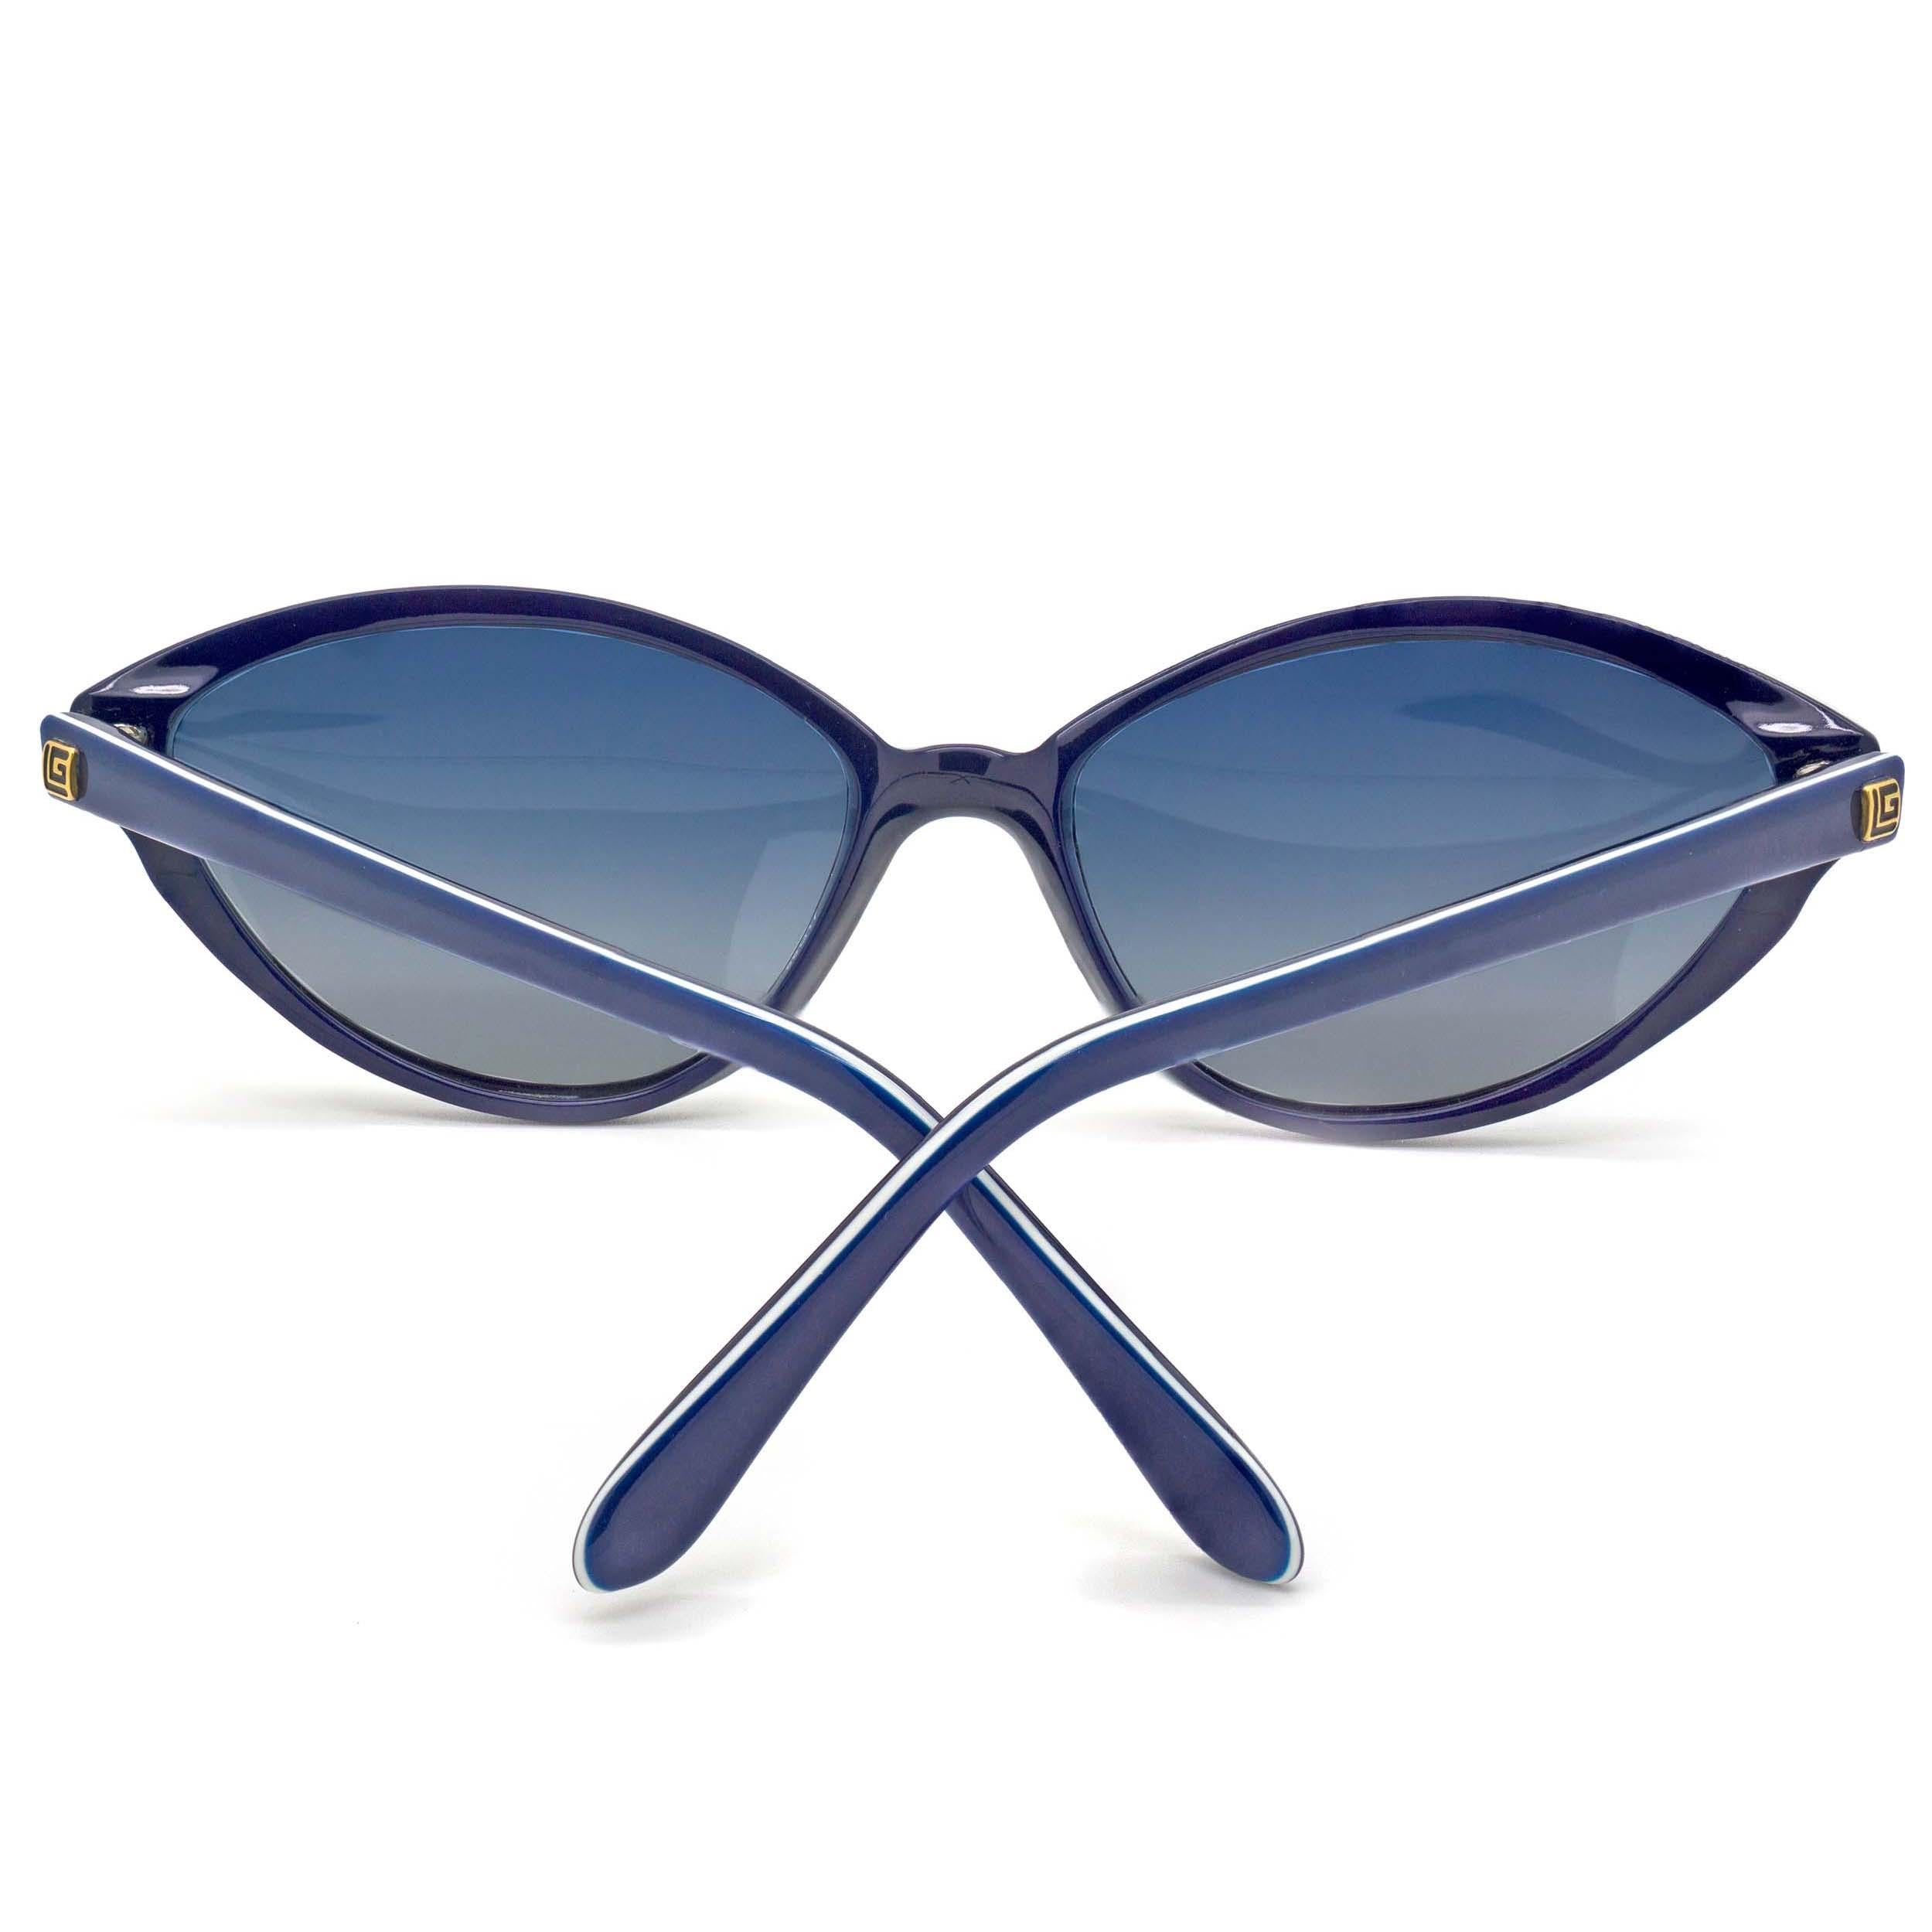 Gray Guy Laroche vintage sunglasses For Sale